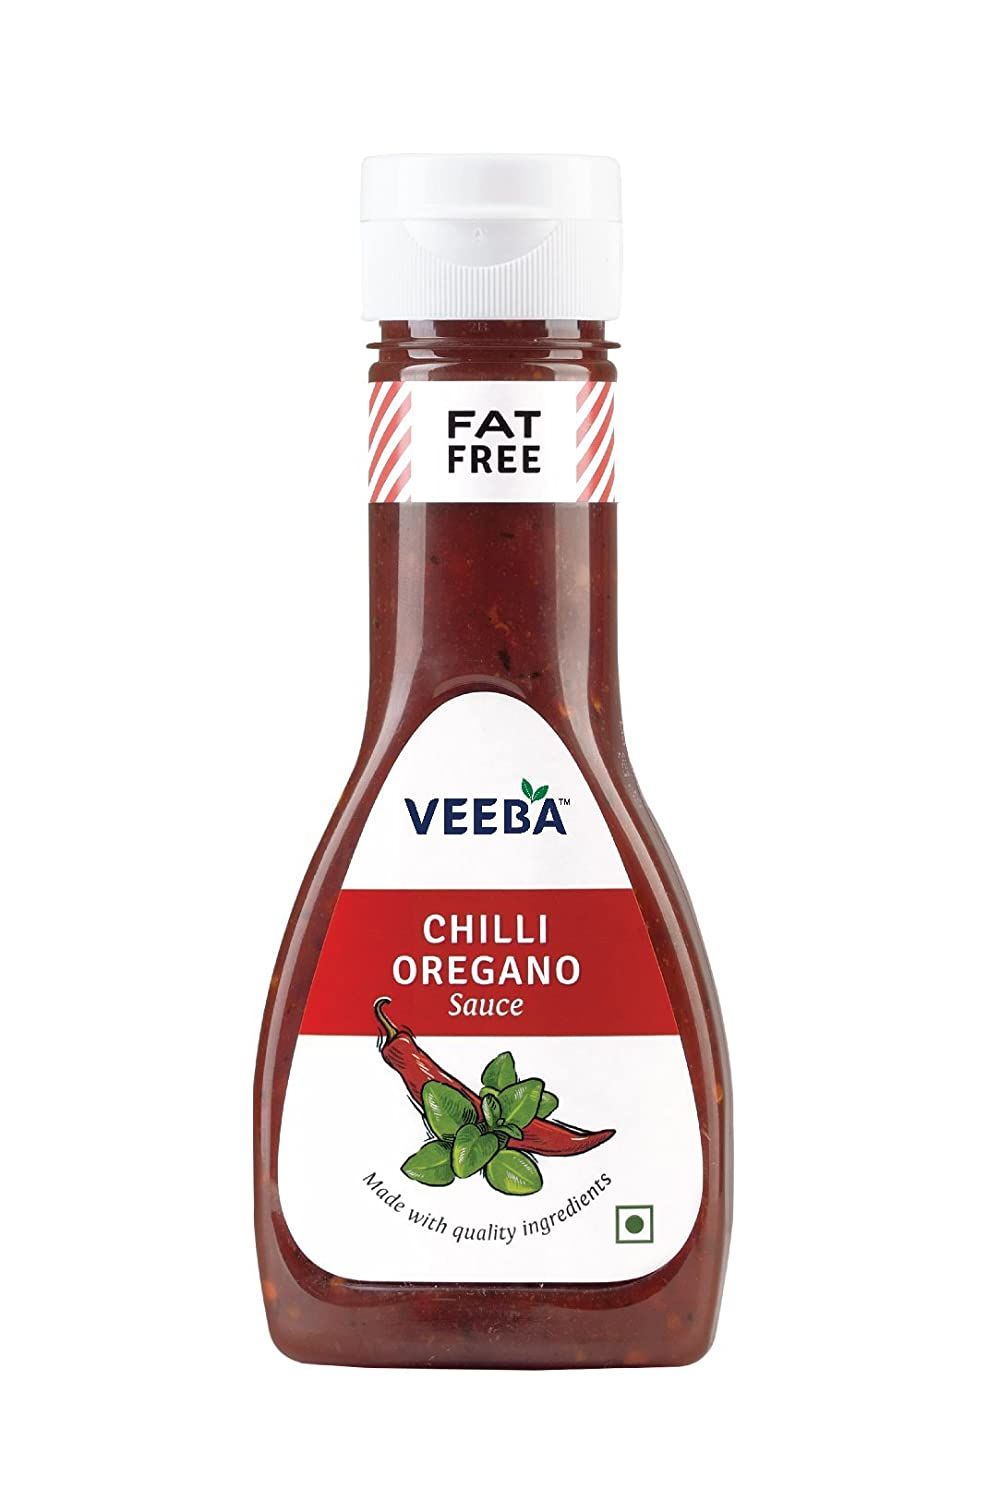 Veeba Chilli Oregano Sauce Image